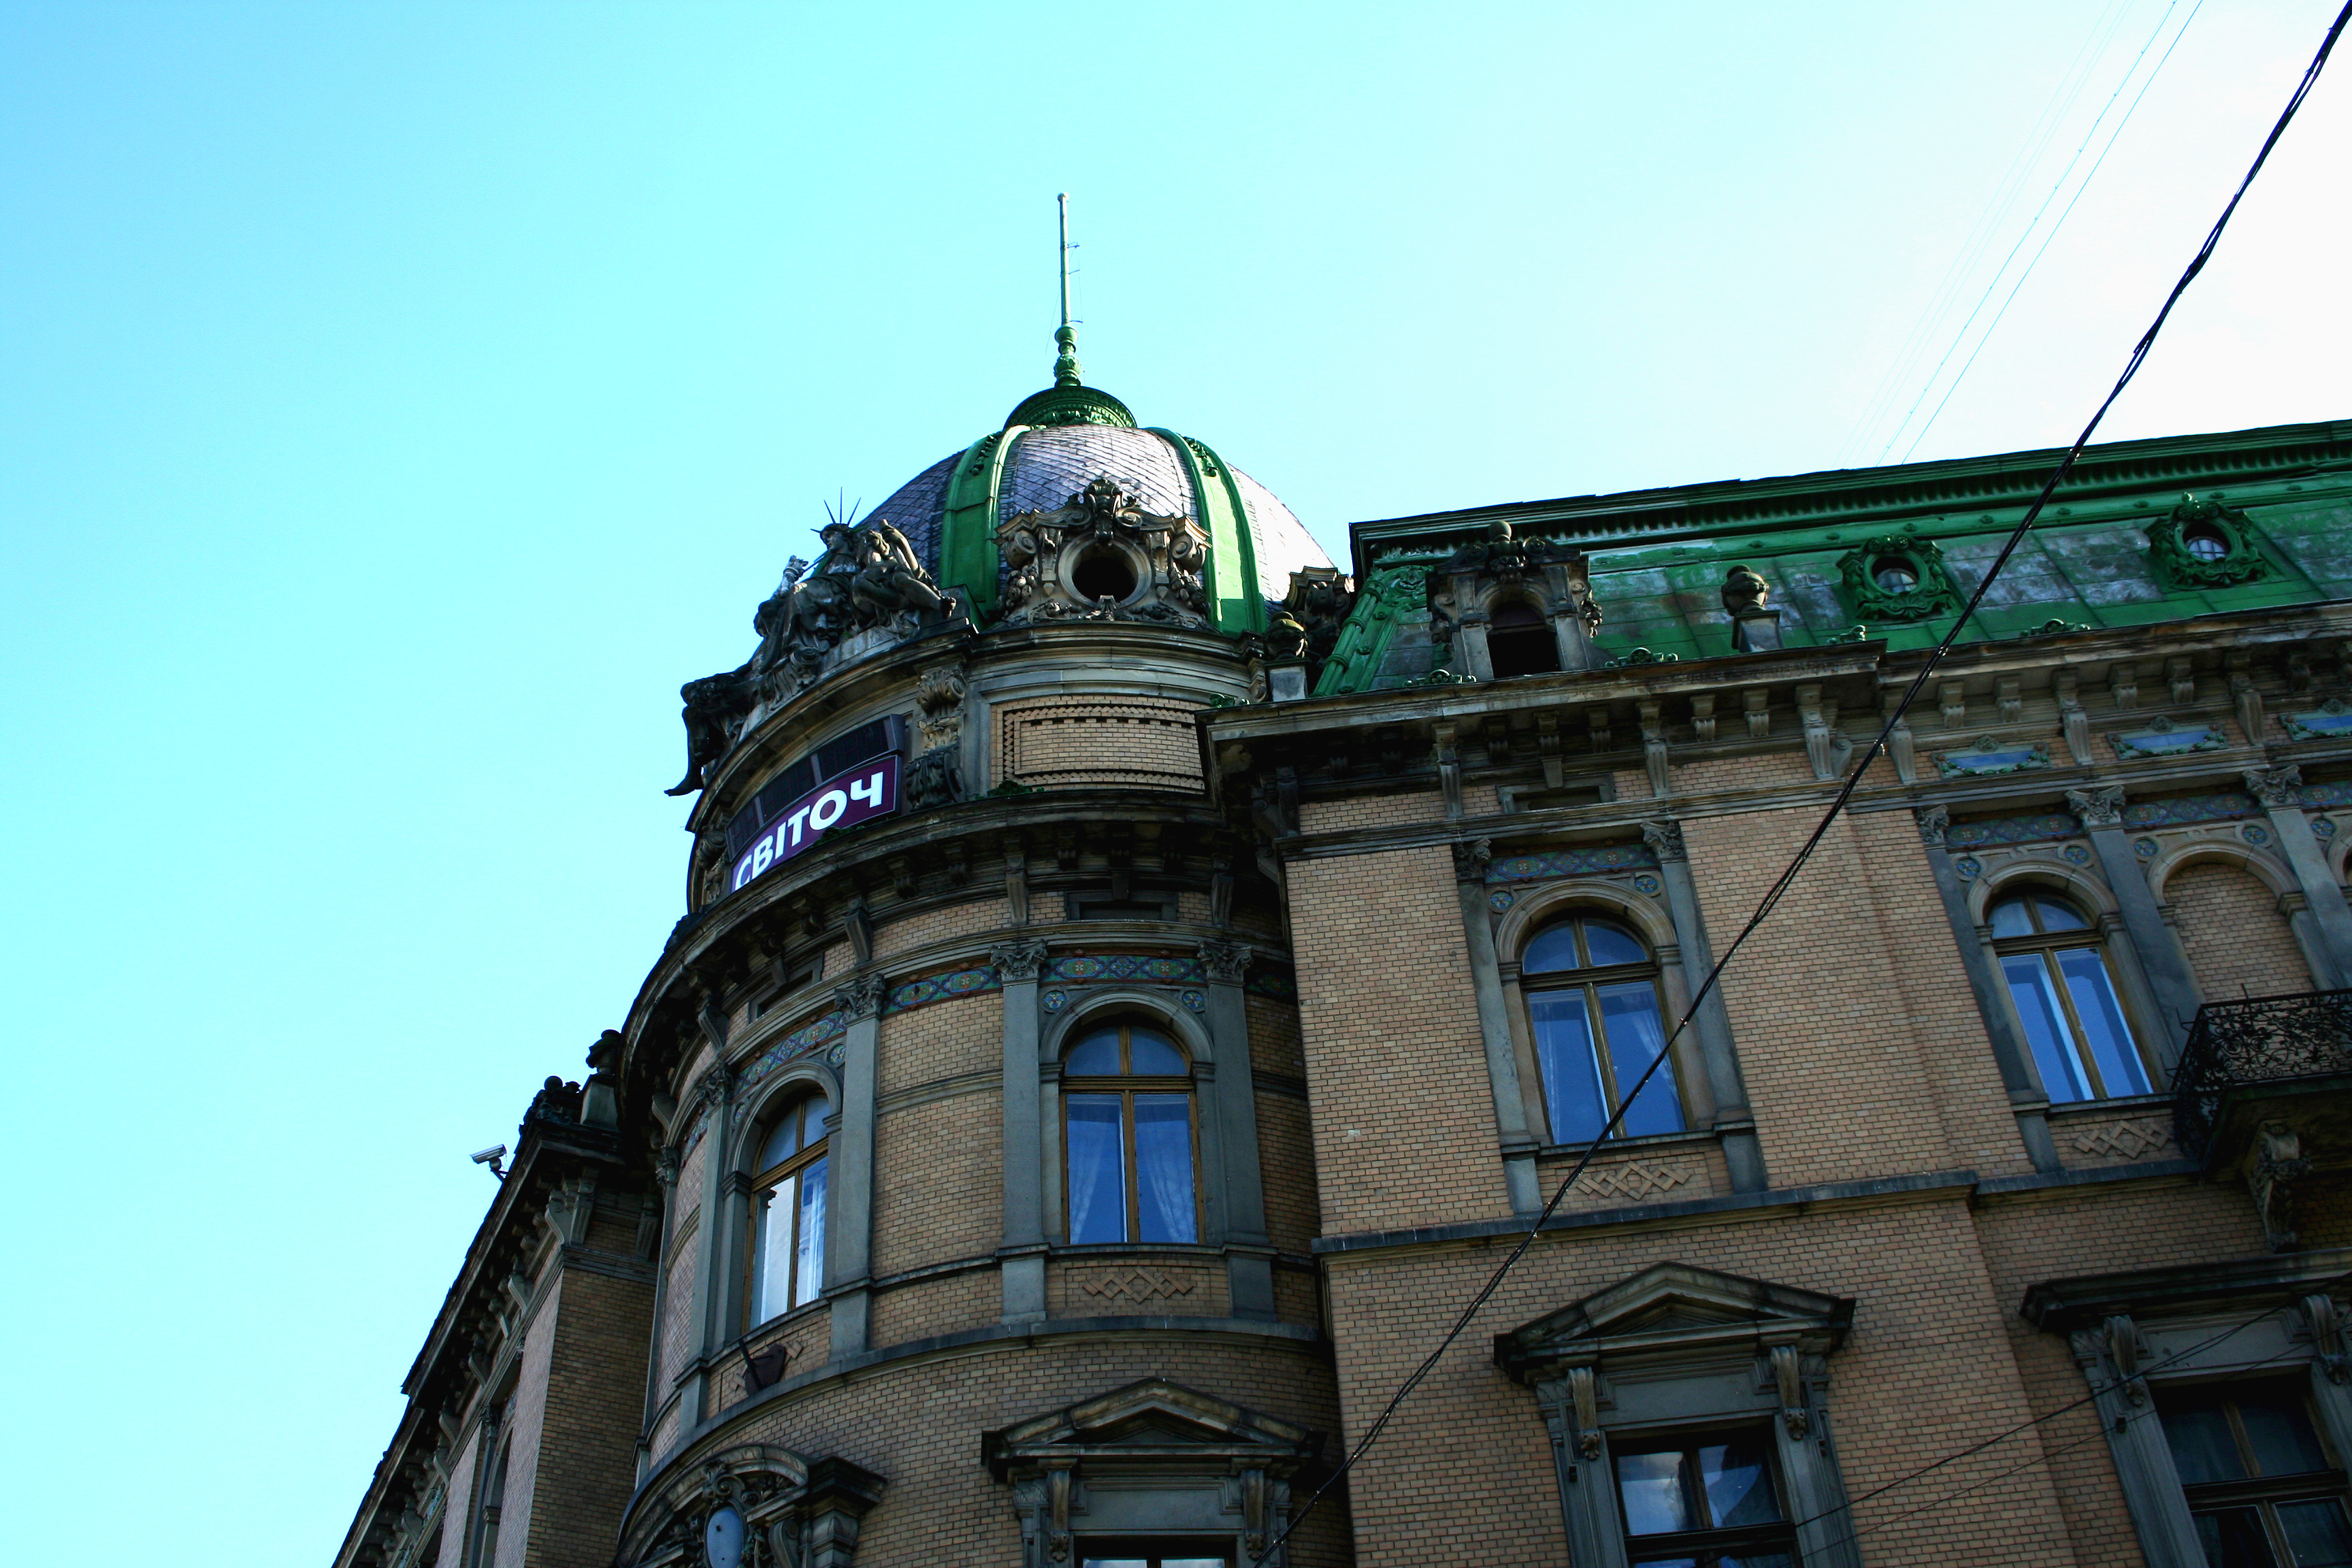 An impressive rooftop on a building on Prospekt Svobody near the Grand Hotel.